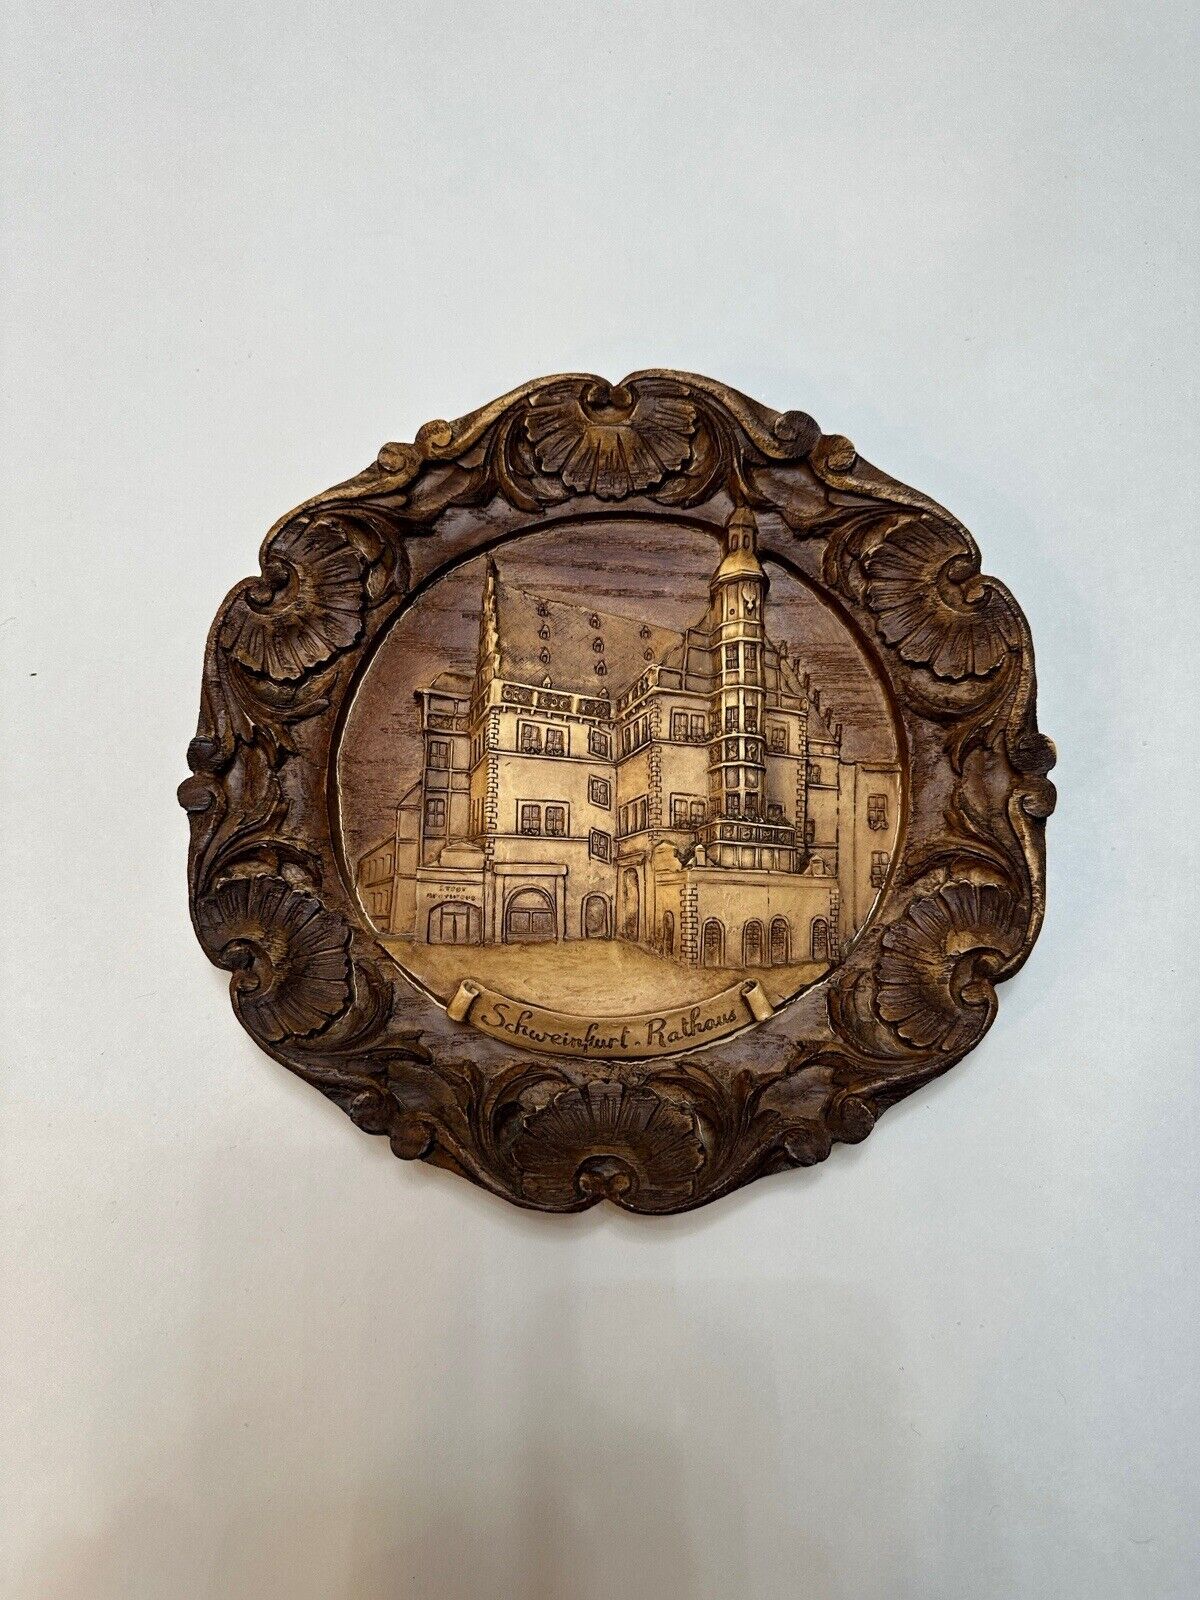 Vintage Schweinfurt Rathaus German Carved Wood Resin Collector Plate 9”